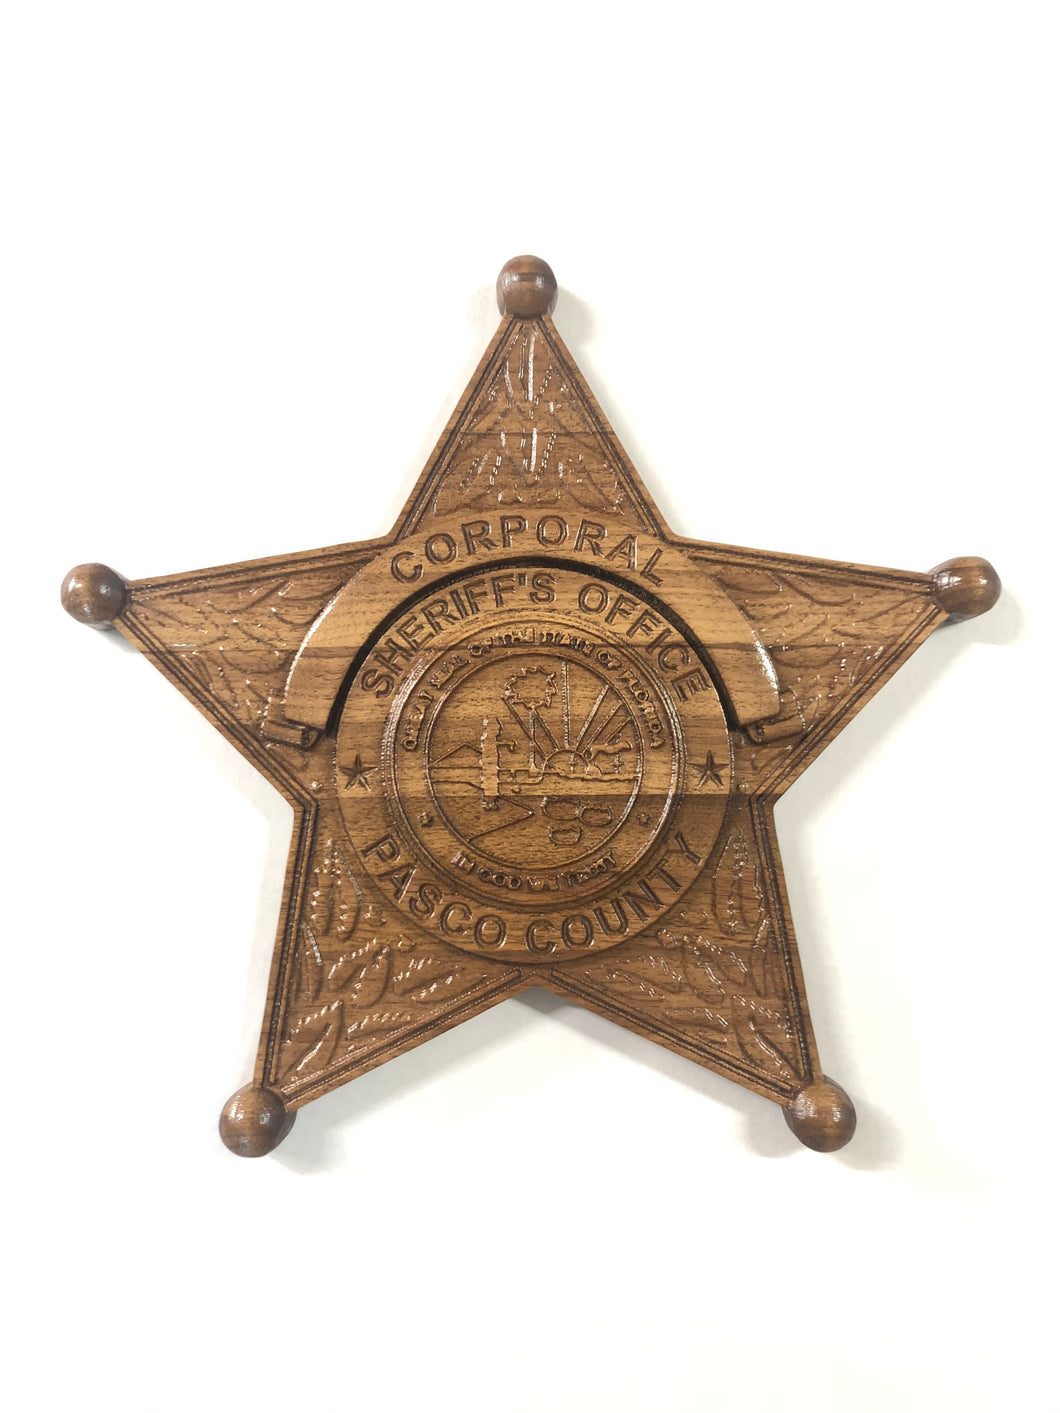 Pasco County Florida Sheriff's Department Uniform Badge